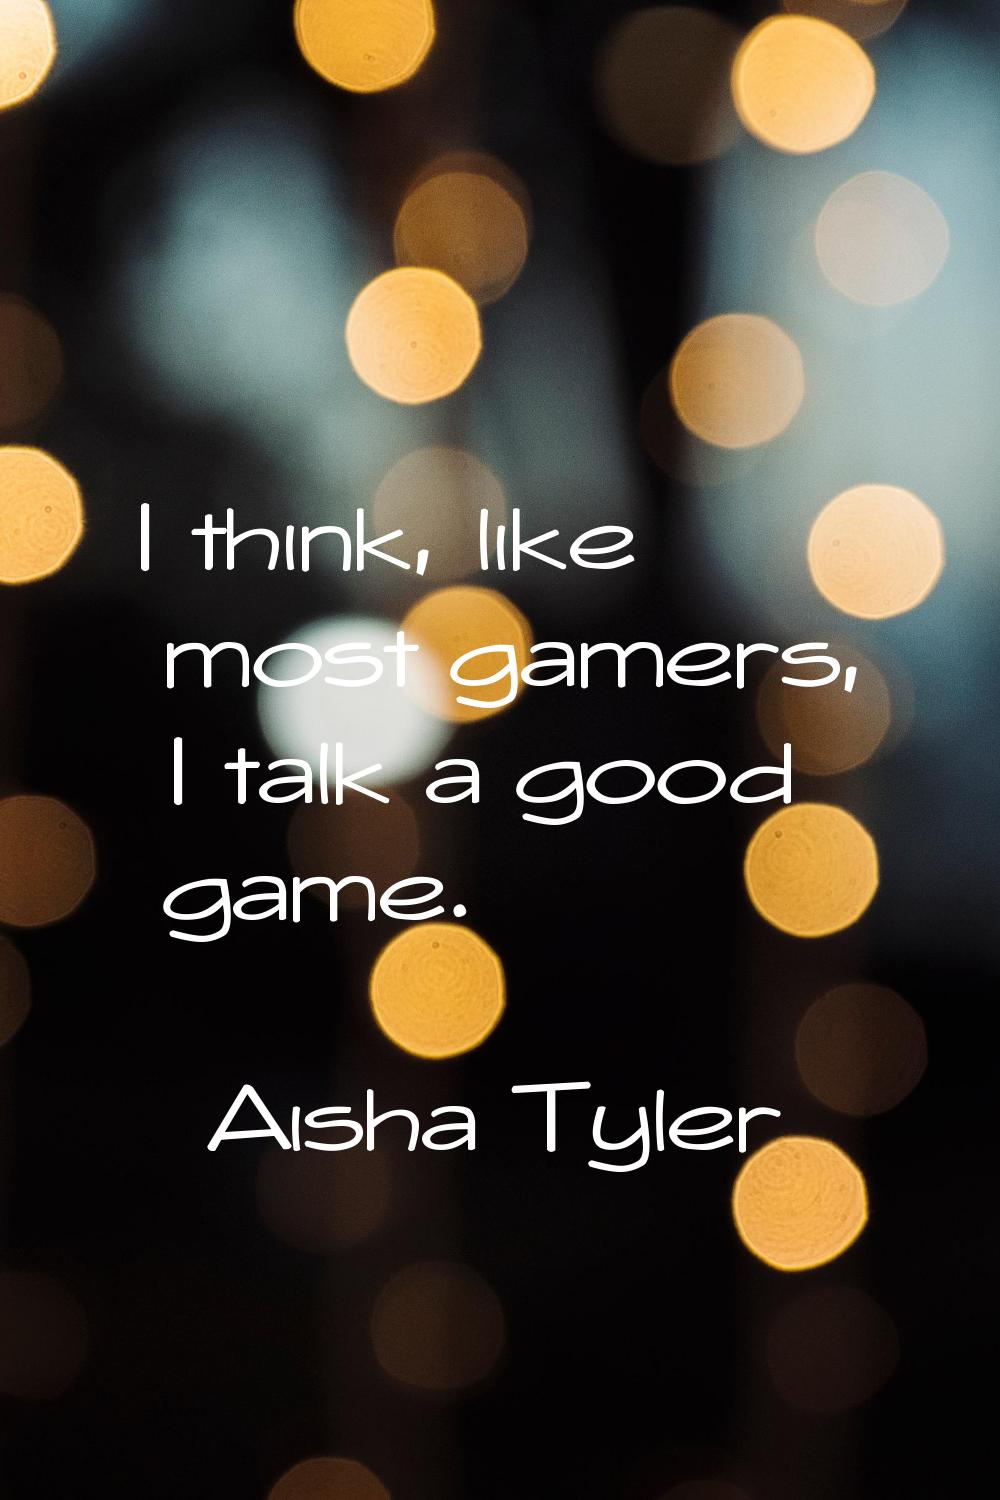 I think, like most gamers, I talk a good game.